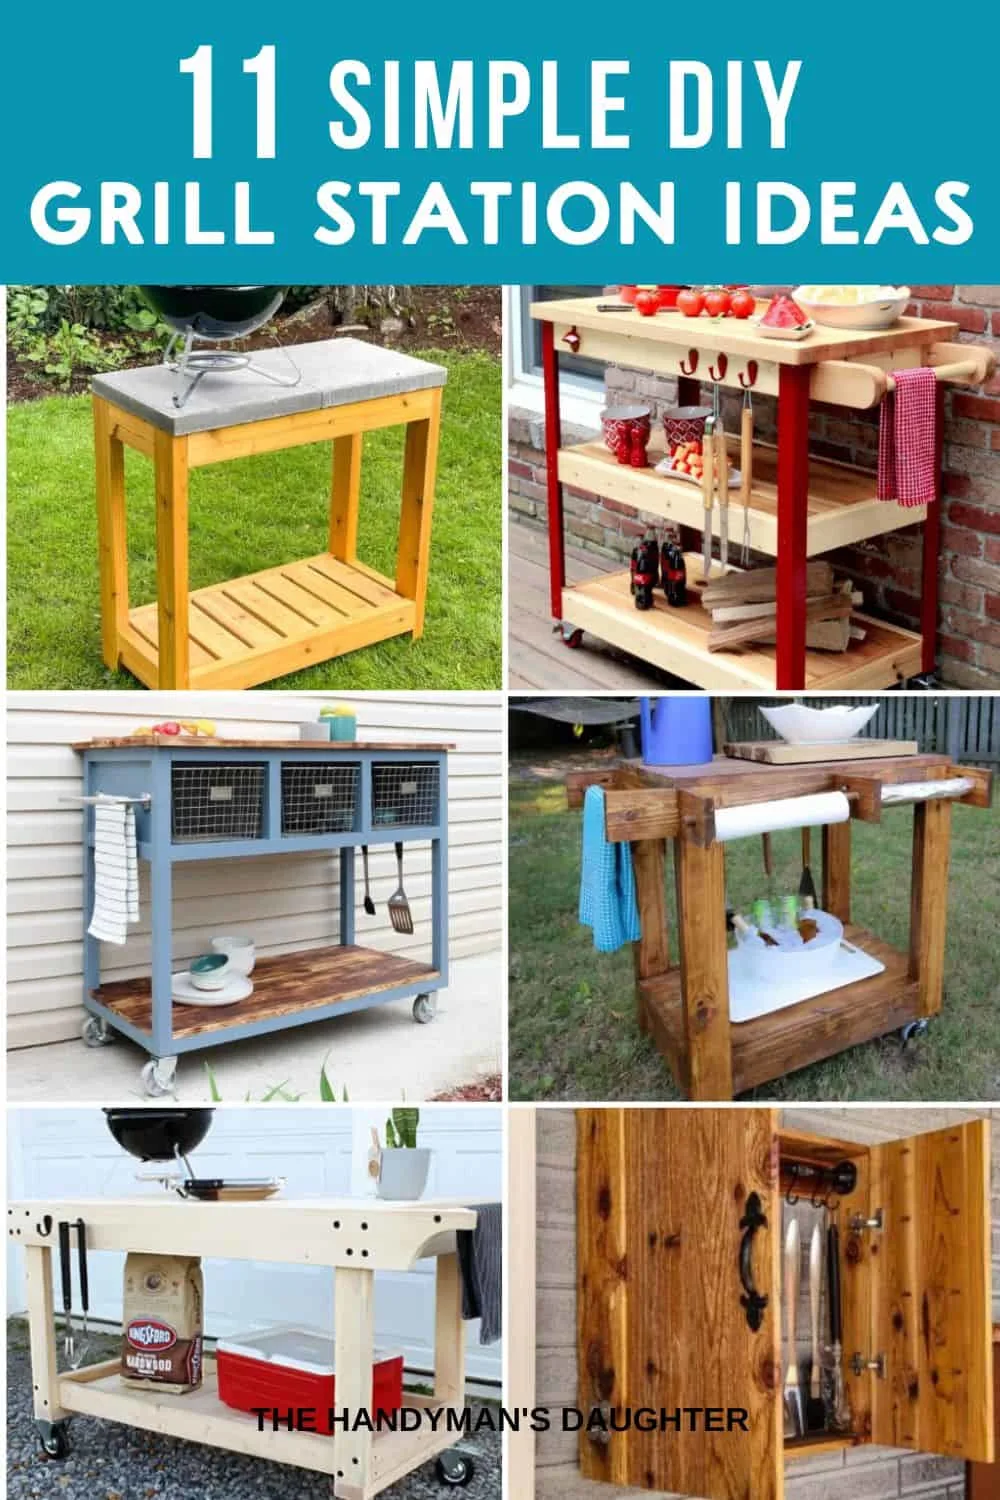 DIY Mobile Craft Station  Mobile craft, Craft station, Home and